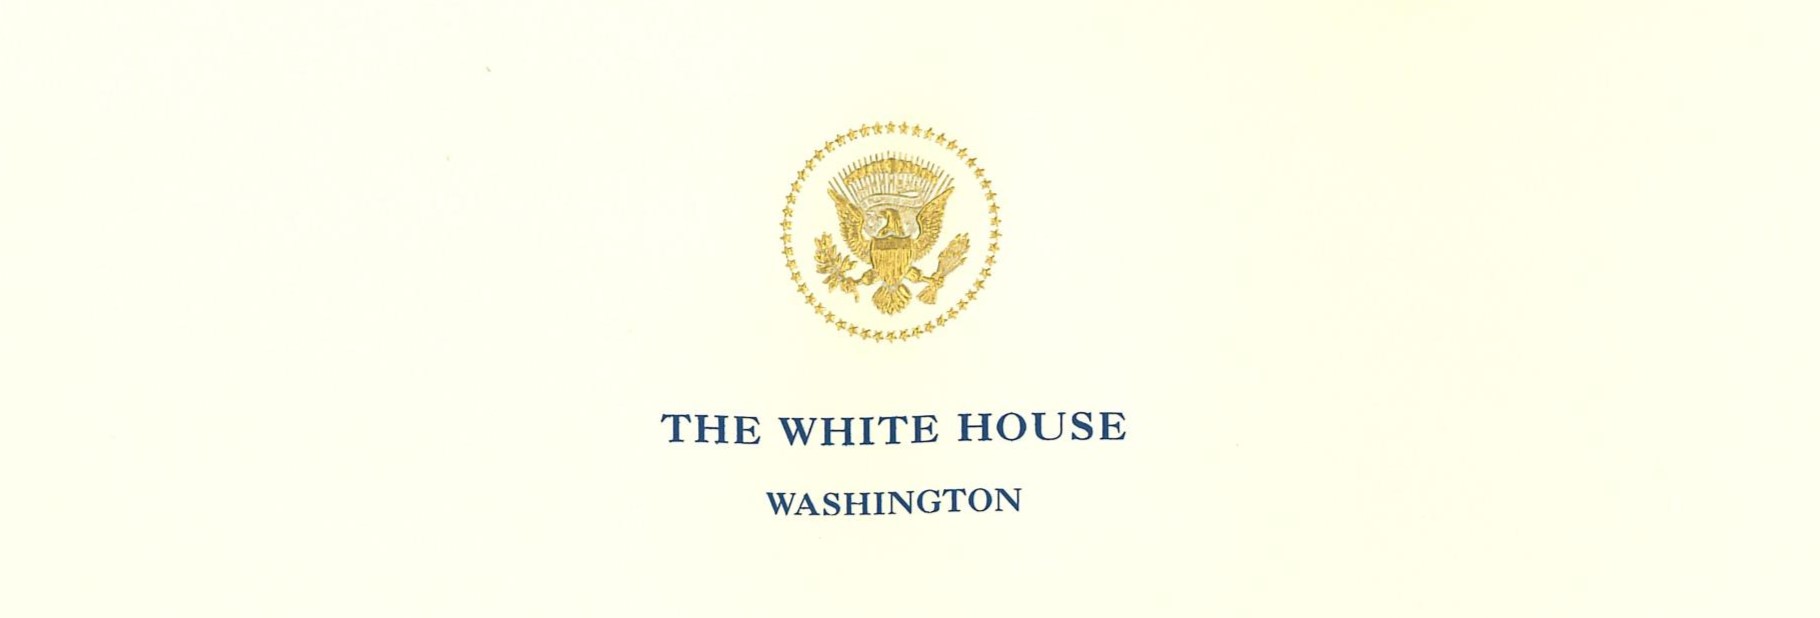 Official The White House letter header